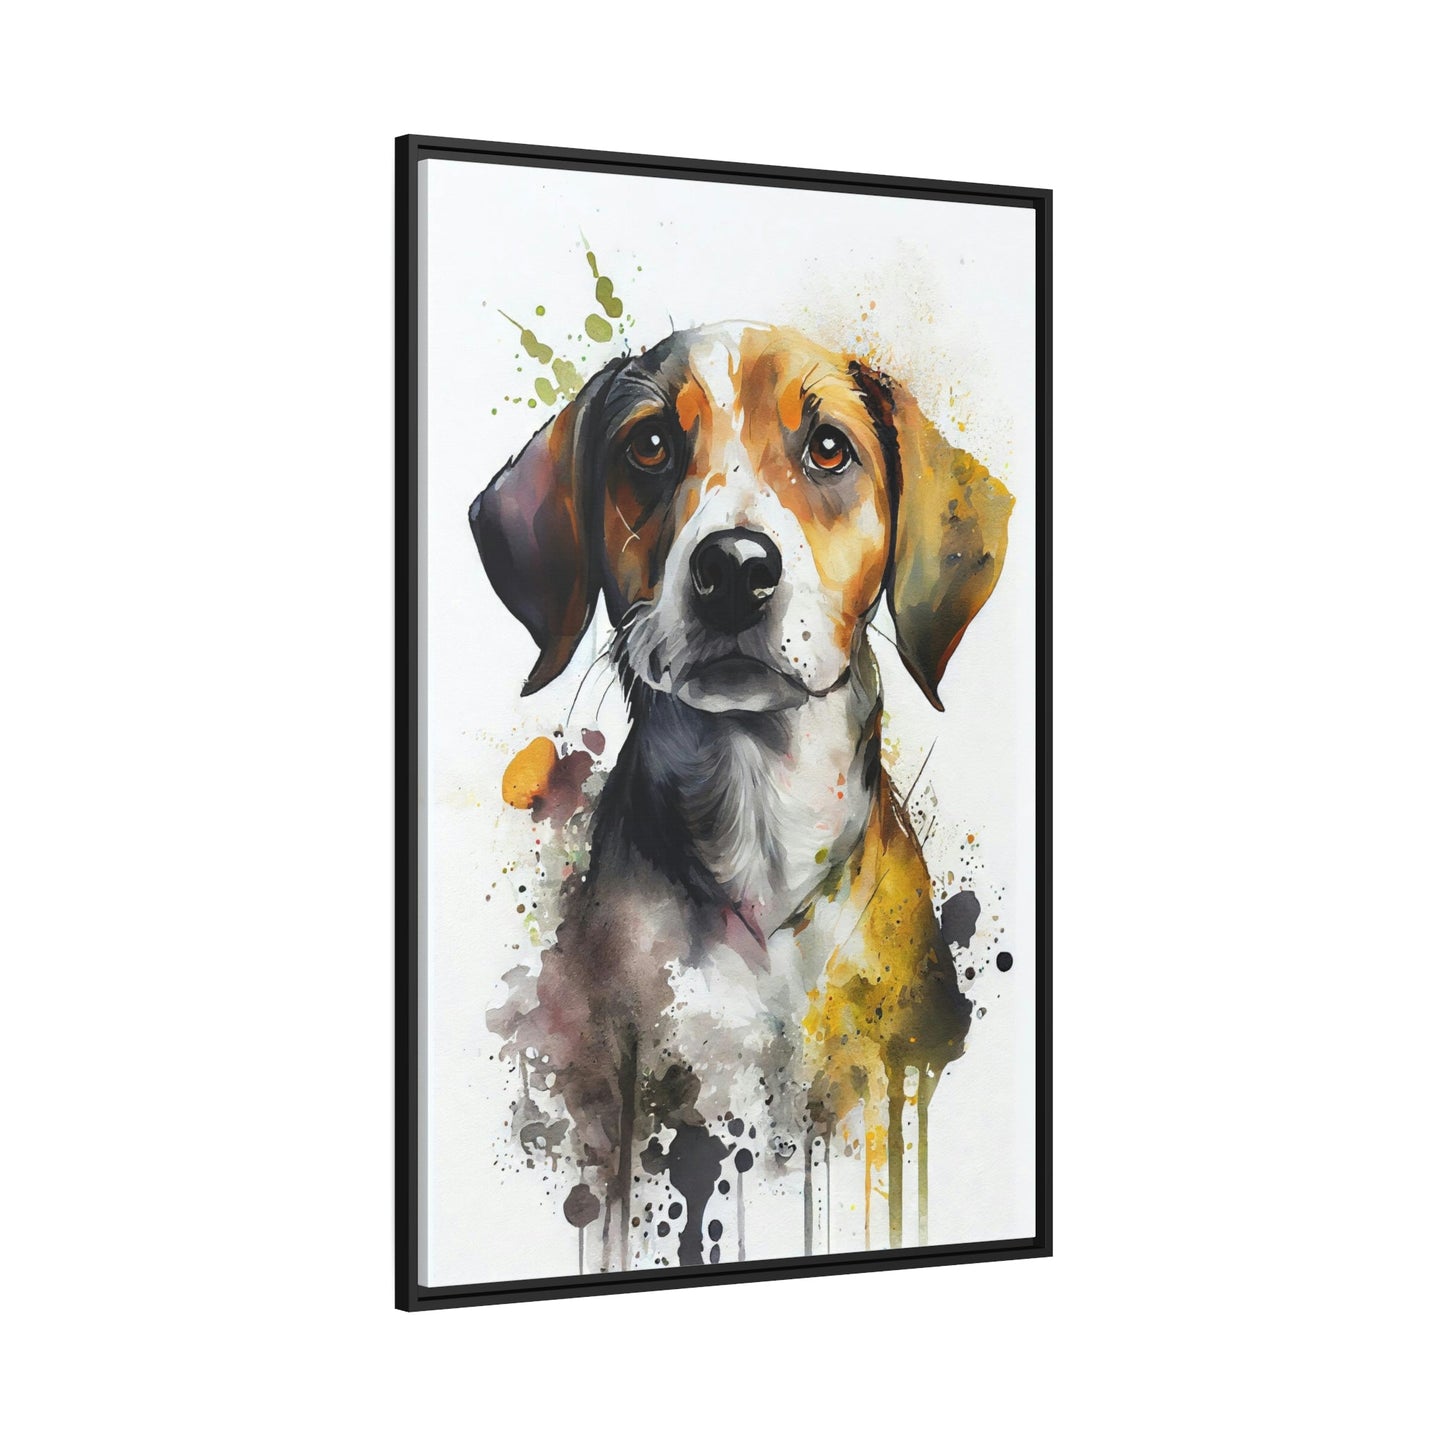 Canine Companion: Natural Canvas Wall Art of a Loyal Dog